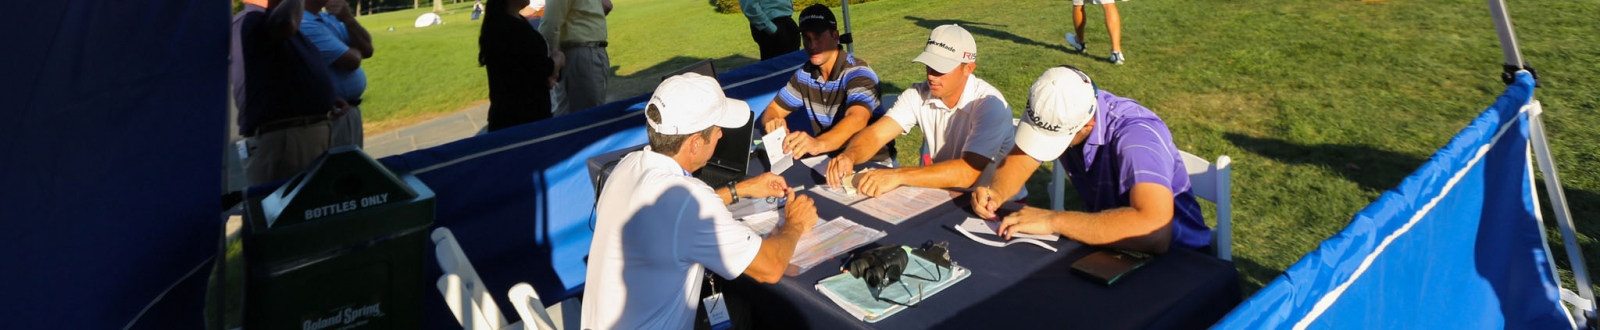 golfers handing over scorecards